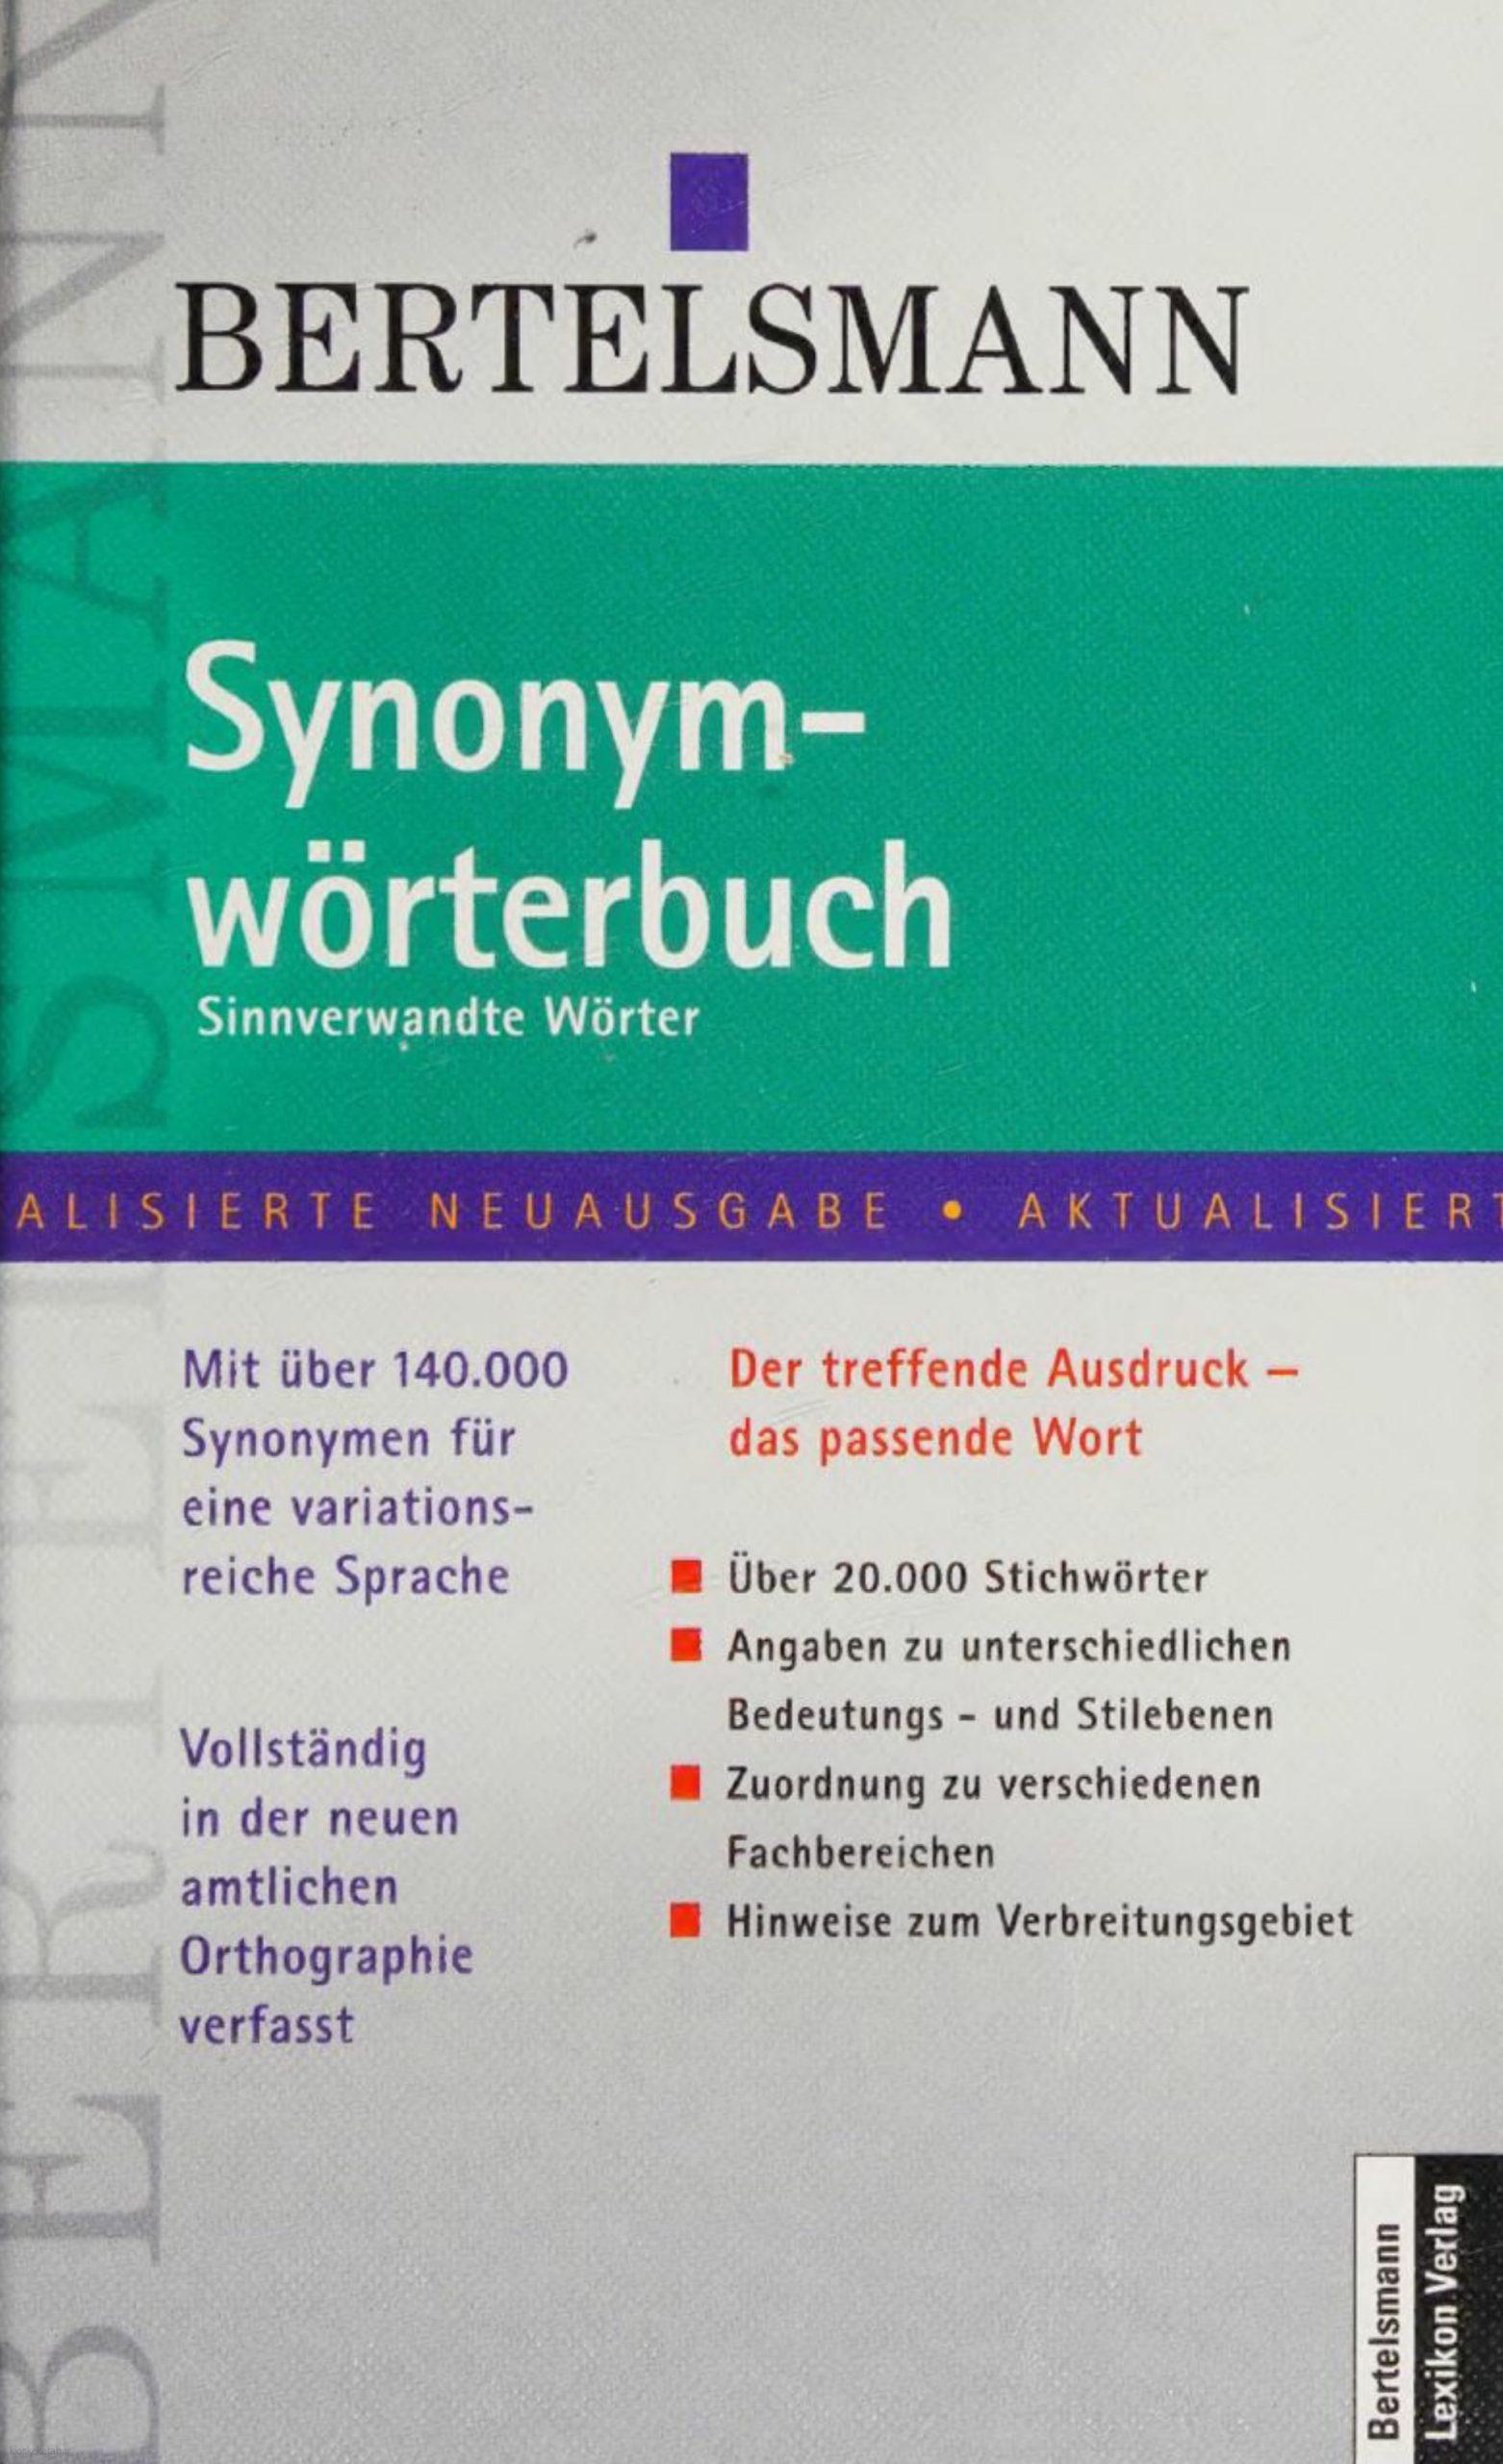 دانلود کتاب آلمانیsynonym-worterbuch sinnverwandt worter